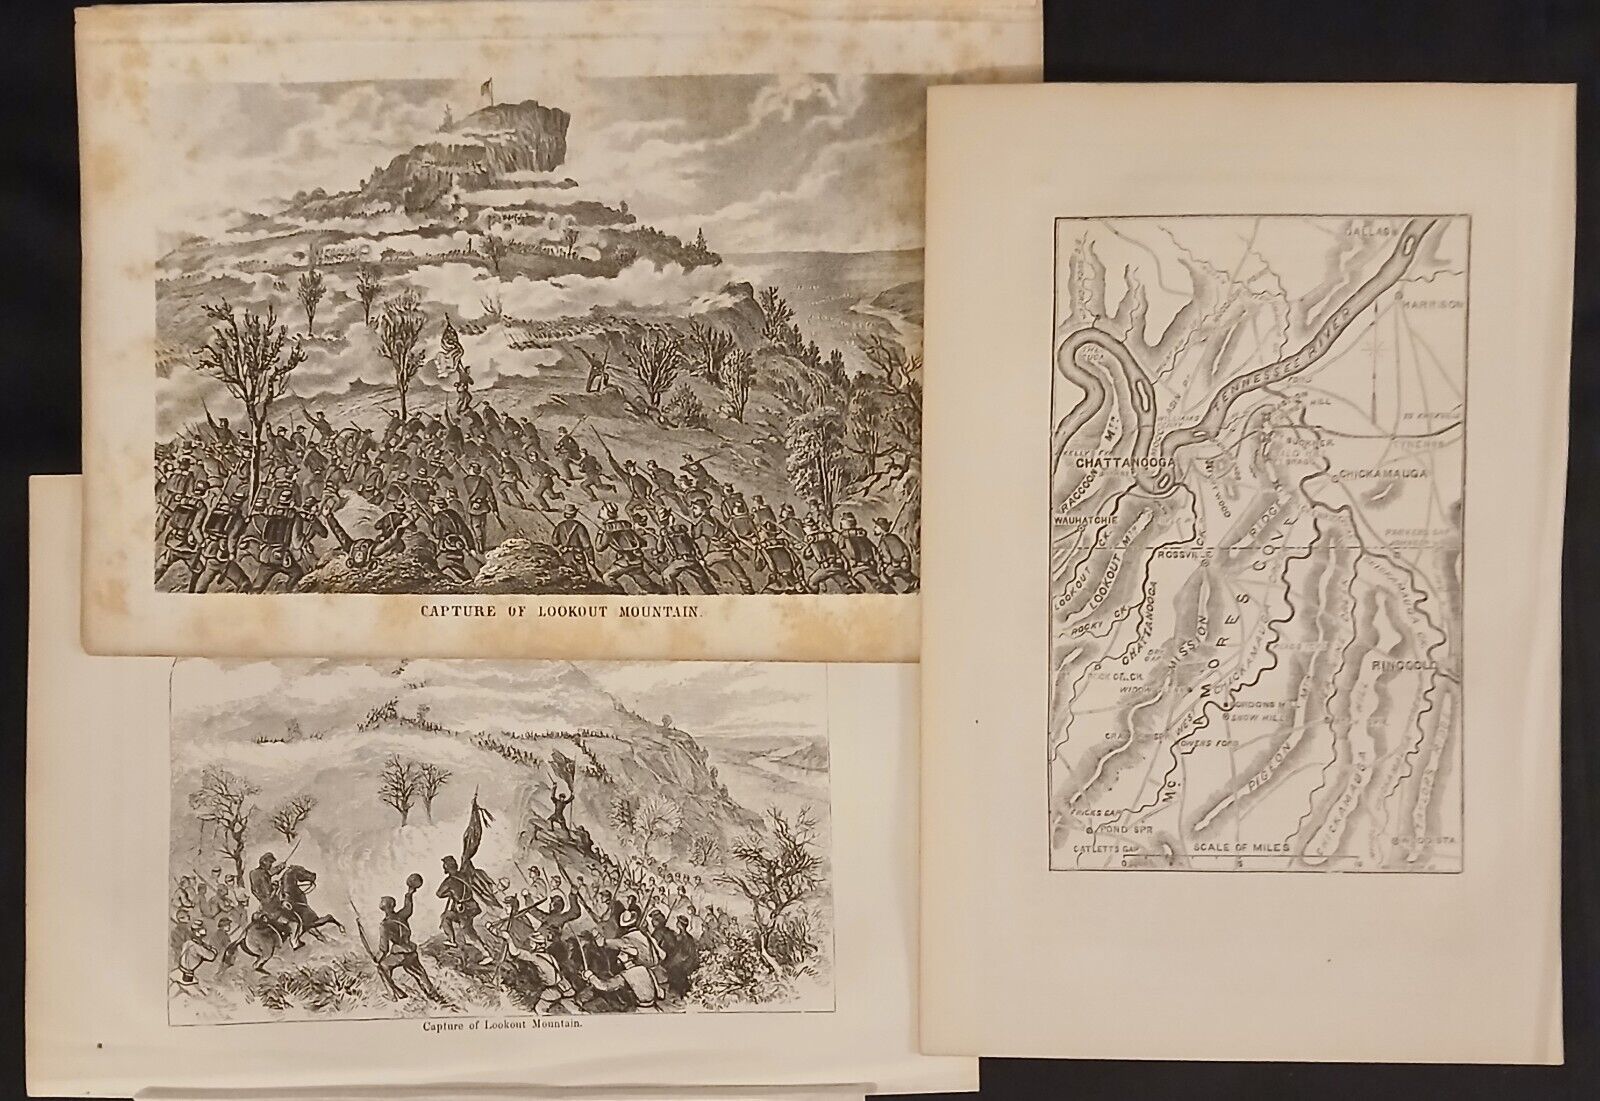 Print/Map/Lithograph Dated 1865 Civil War Prints Feat. Battle Of Lookout Mt.